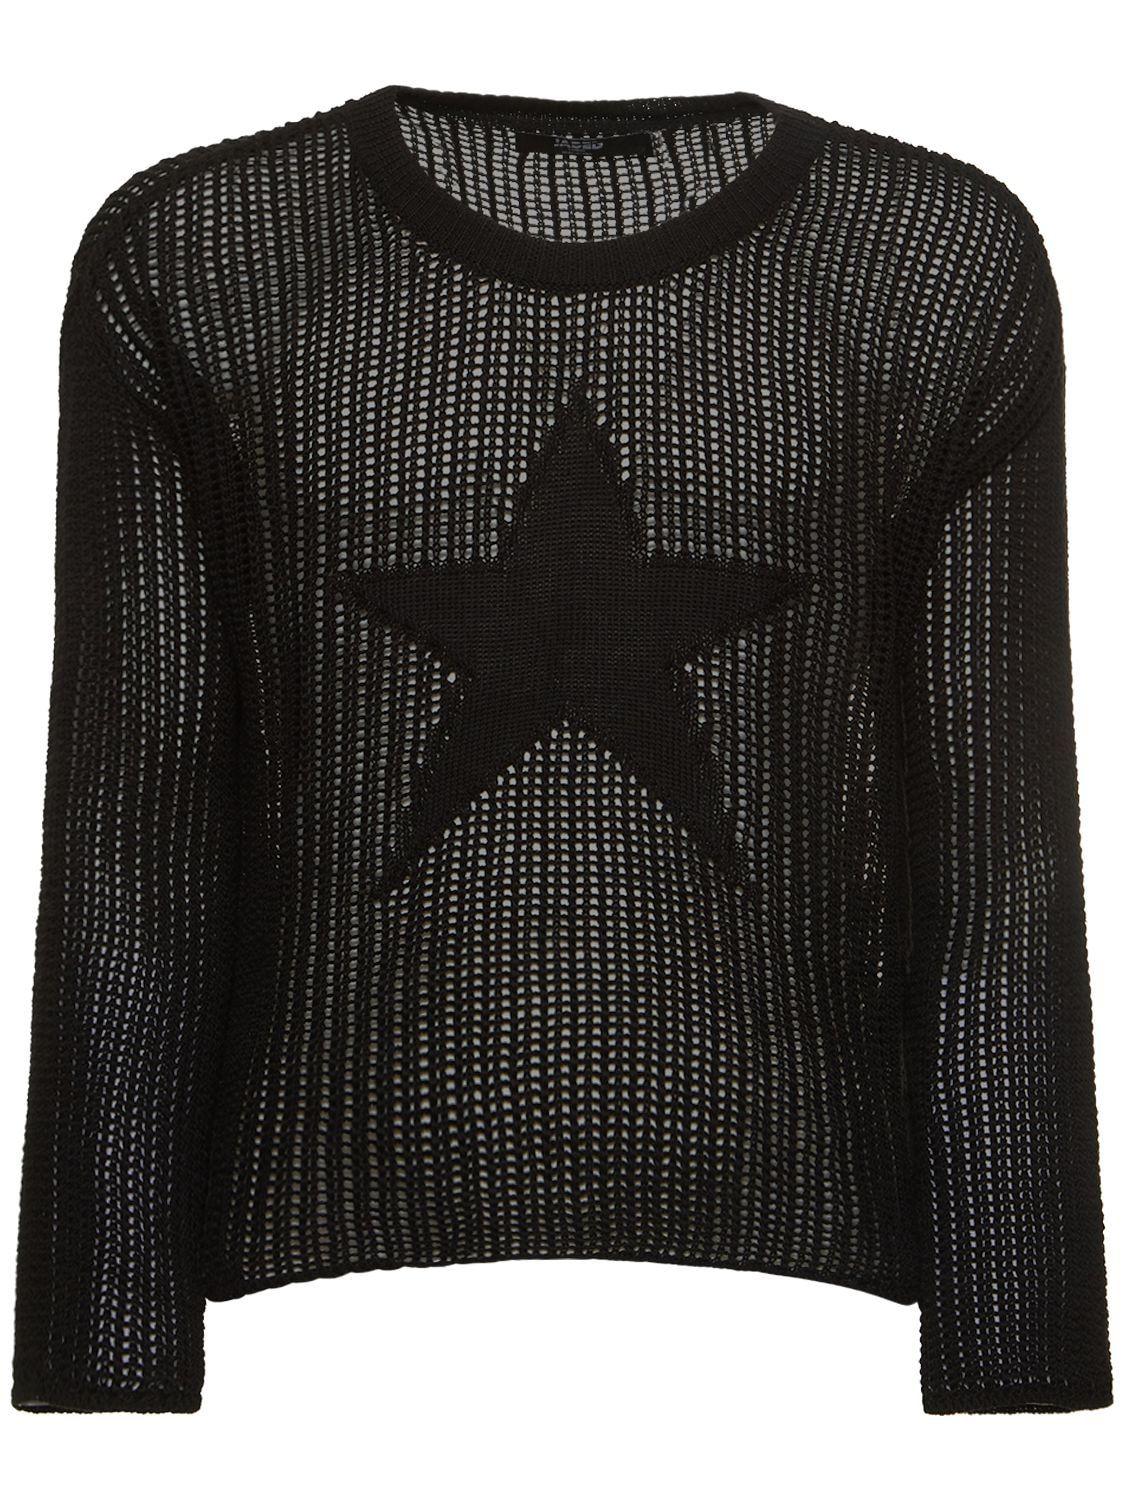 Jaded London Men's Black Star Loose Knit Sweater